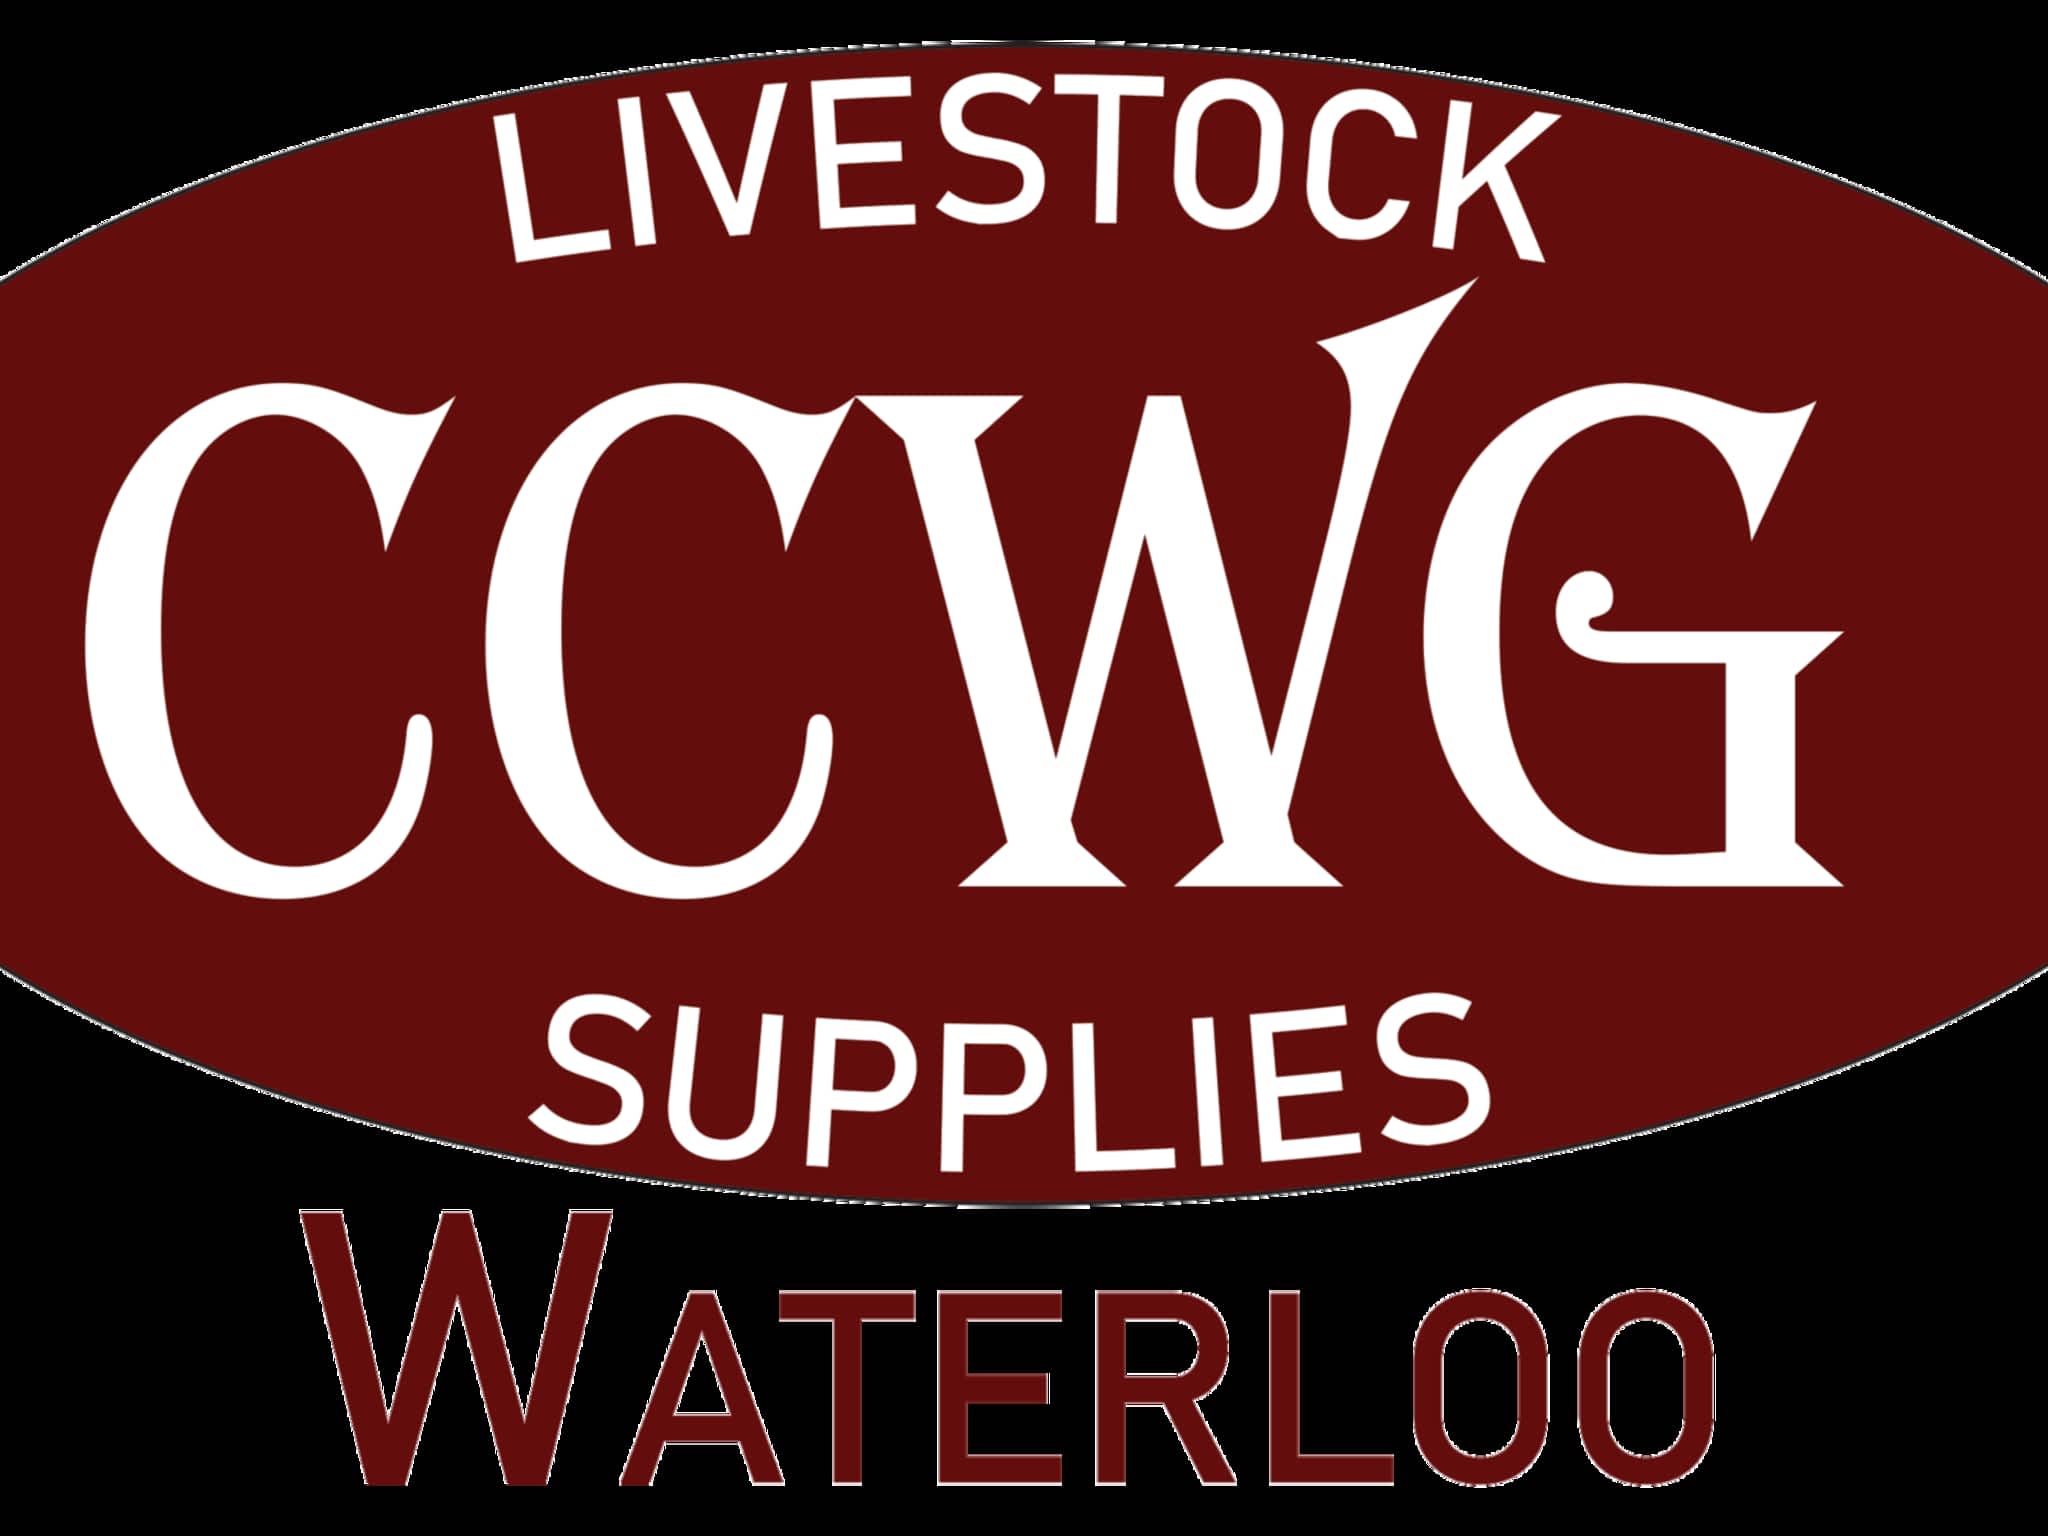 photo CCWG Livestock Supplies